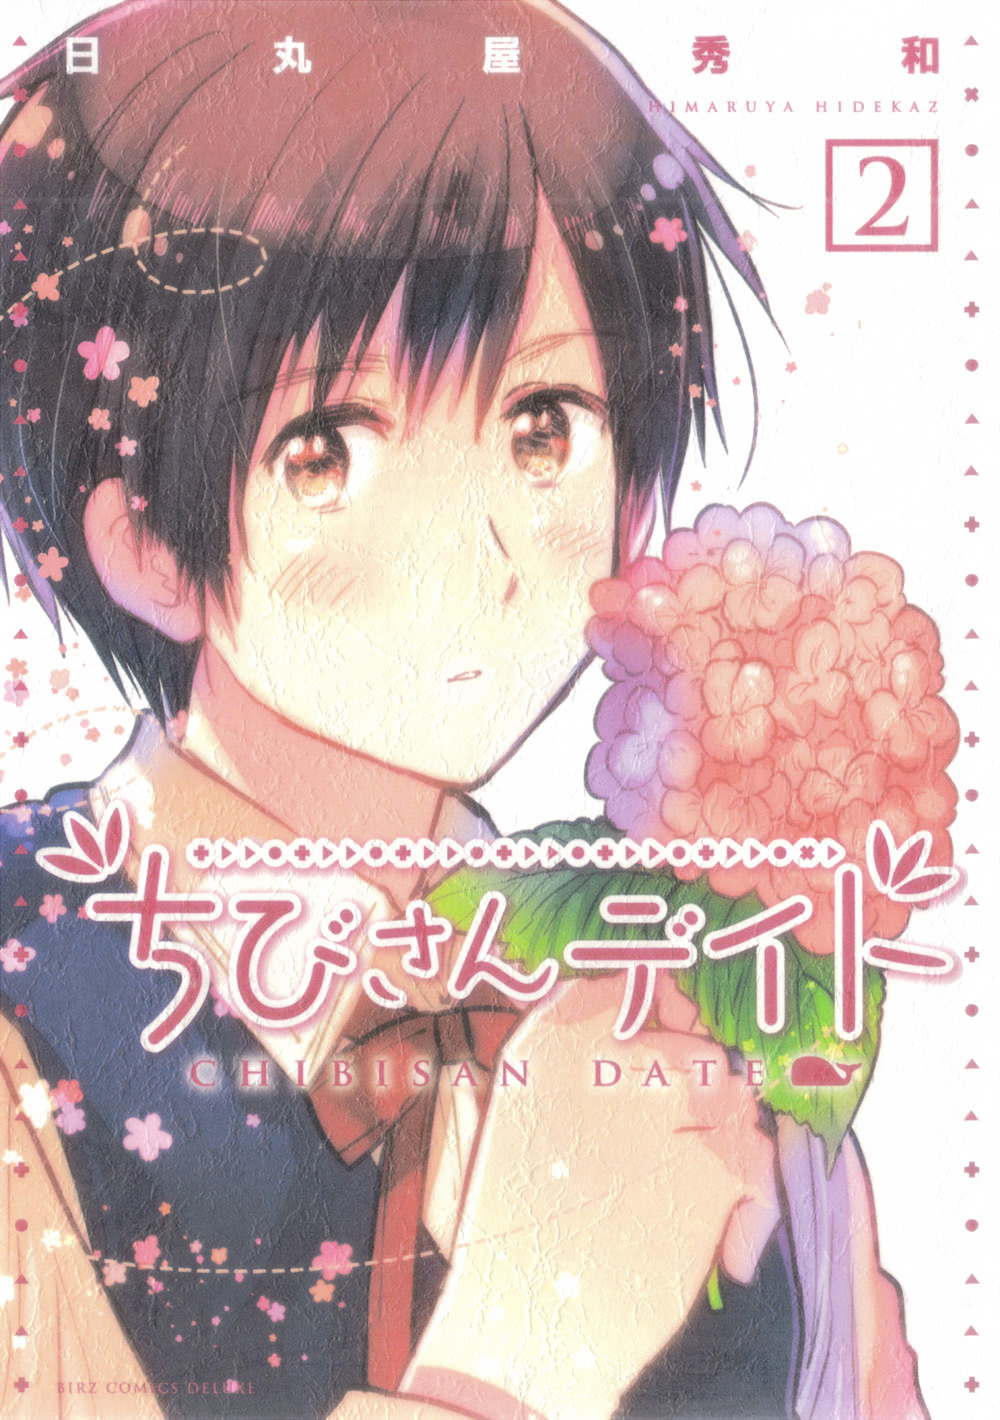 Chibi-san Date - chapter 8 - #1